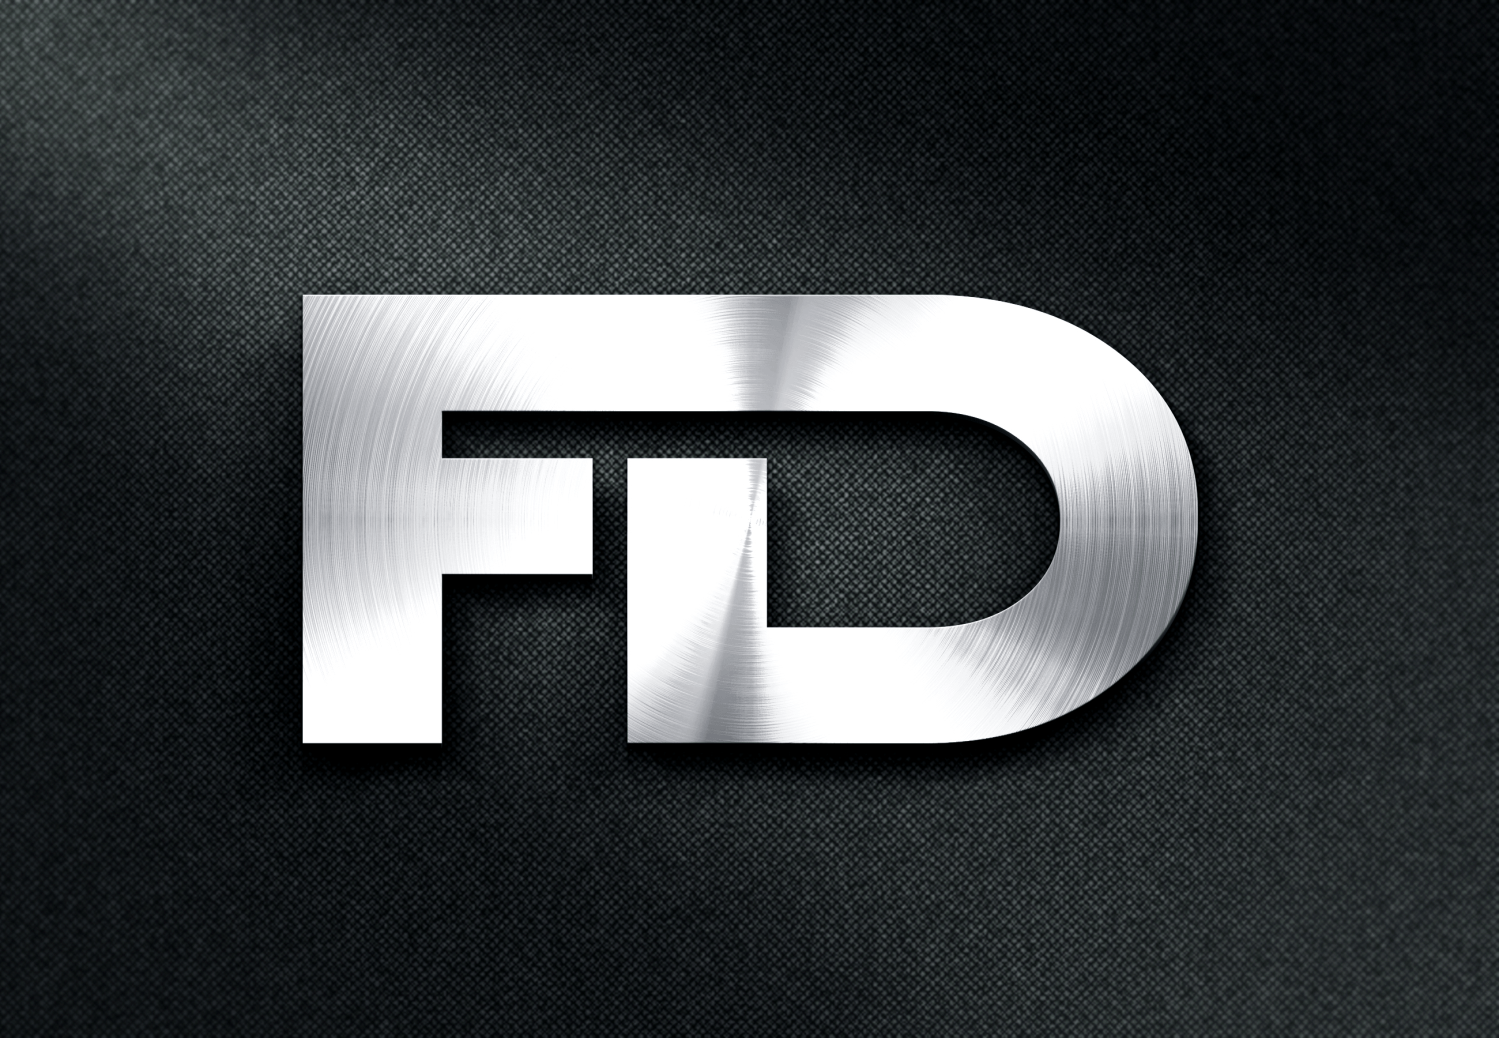 Fd Logo - Bold, Modern, Home Builder Logo Design for FD by JM GRAPHICS ...